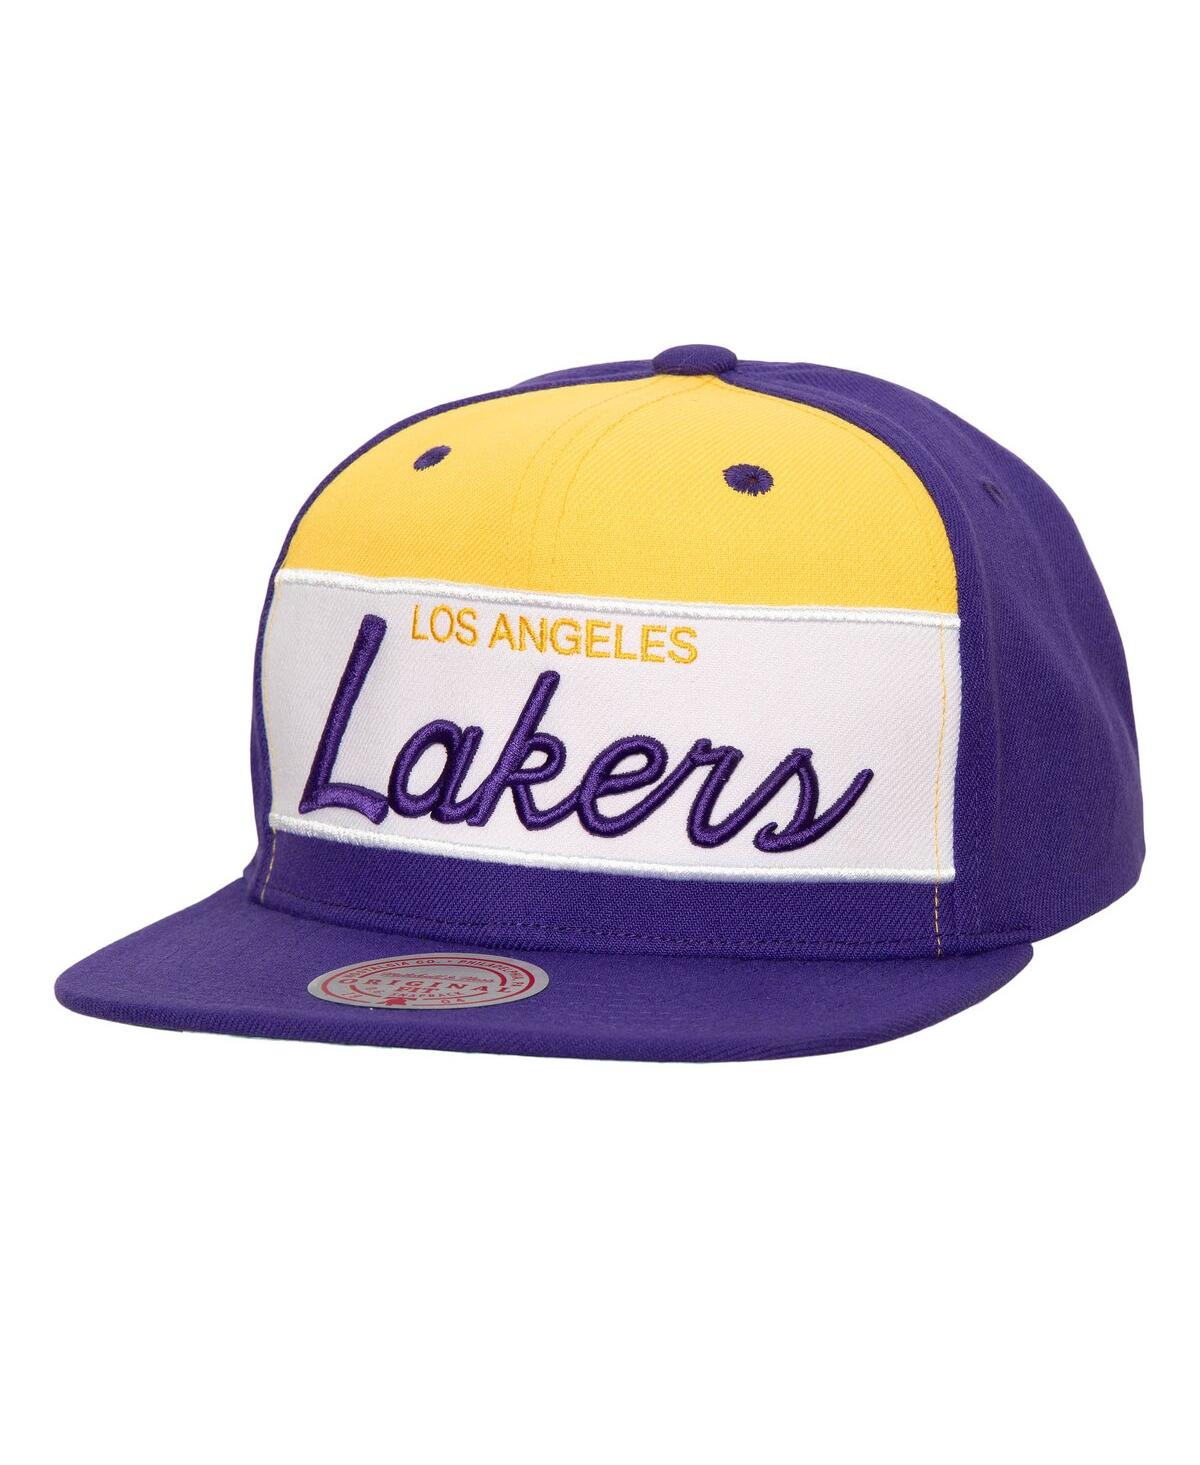 Men's Mitchell & Ness White, Purple Los Angeles Lakers Retro Sport Colorblock Script Snapback Hat - White, Purple